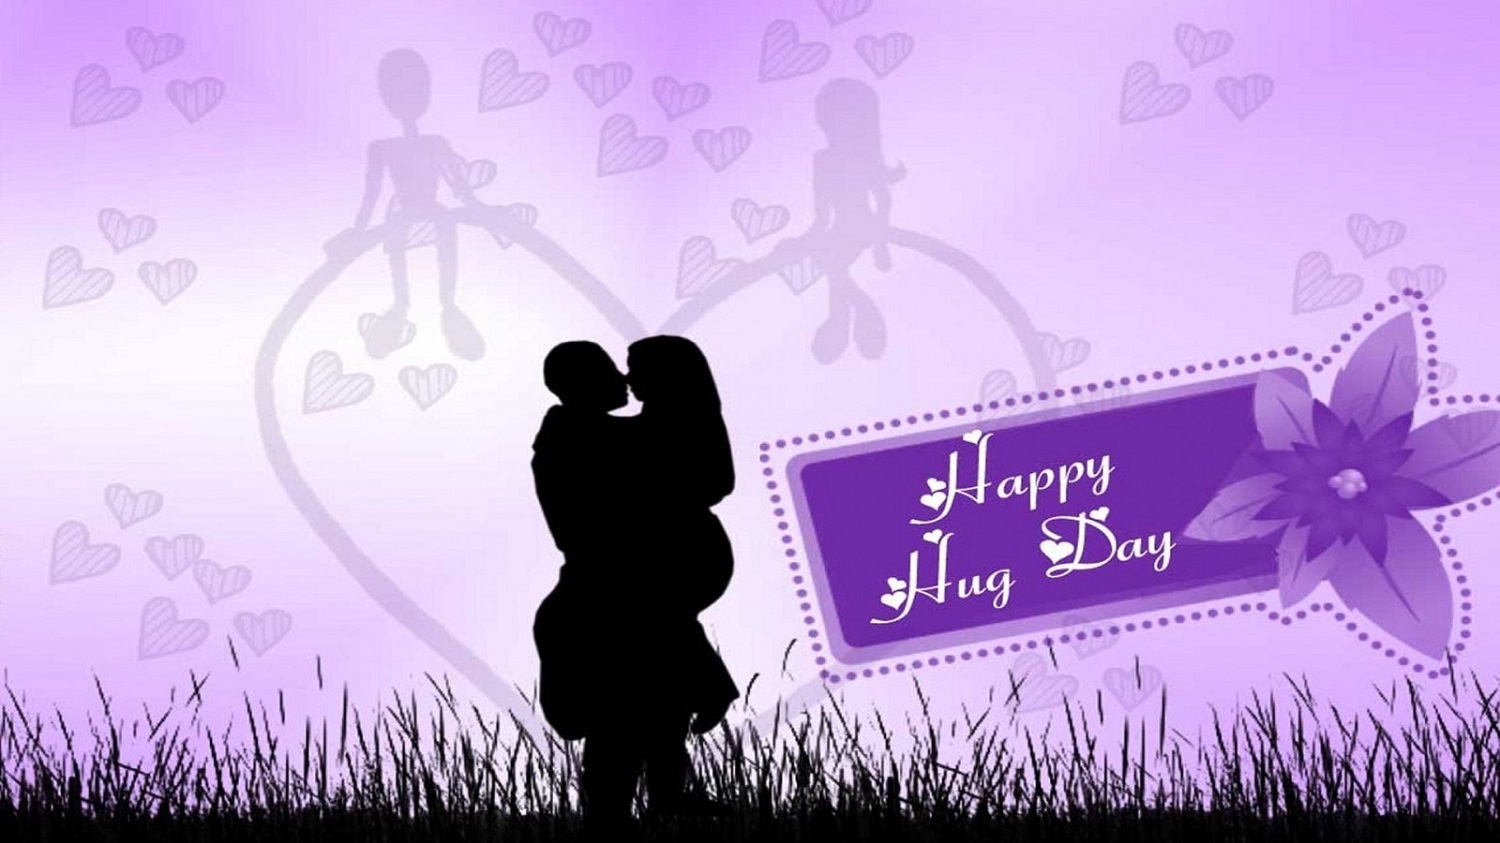 hug day wallpaper,purple,silhouette,text,friendship,violet